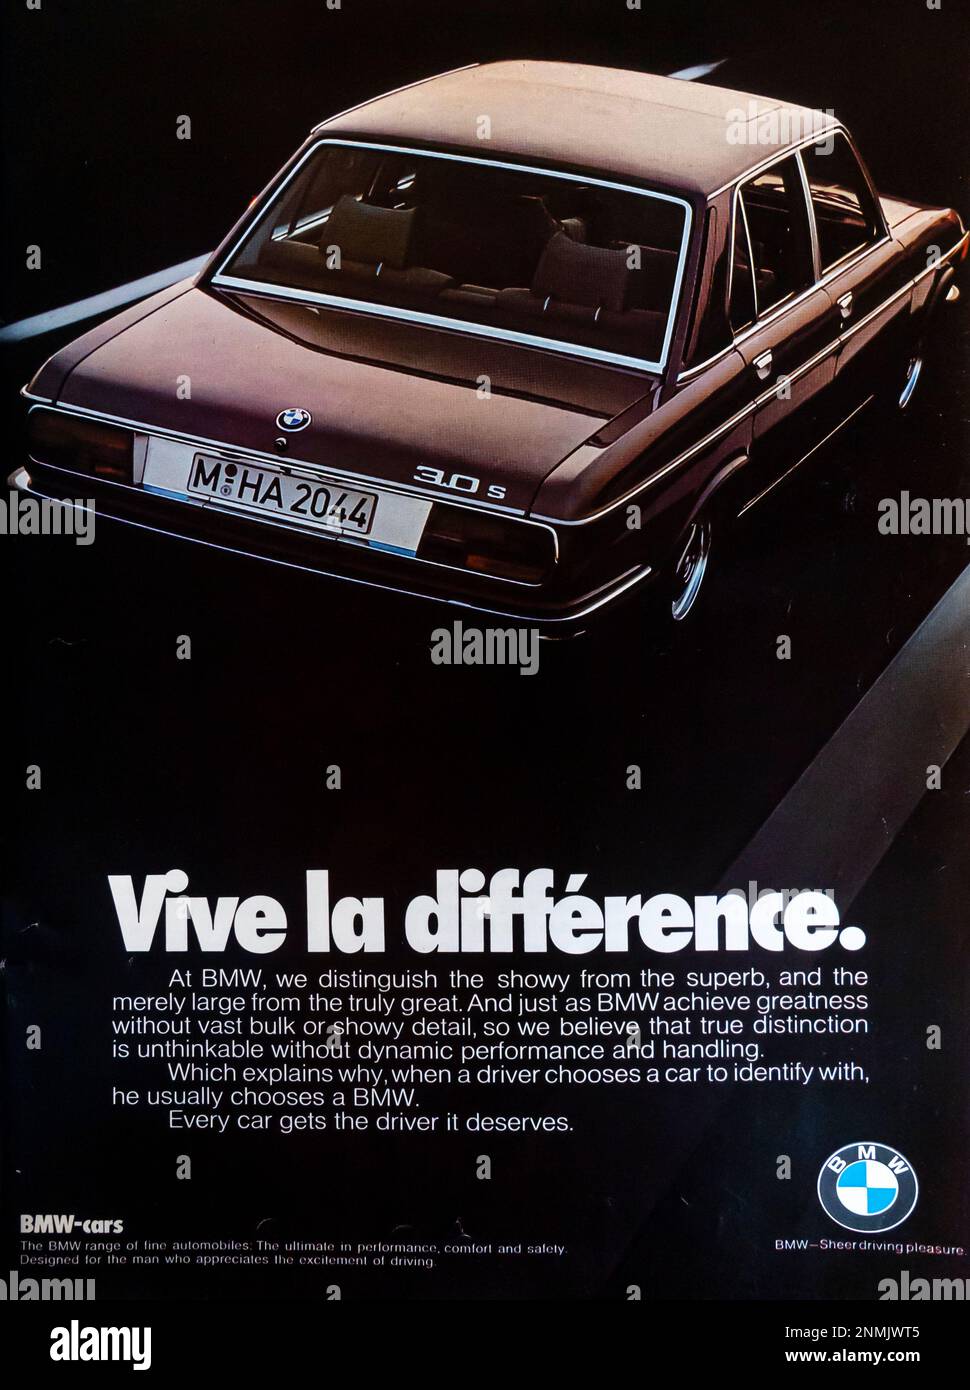 BMW cars  vive la différence advert in Natgeo magazine 1975 Stock Photo